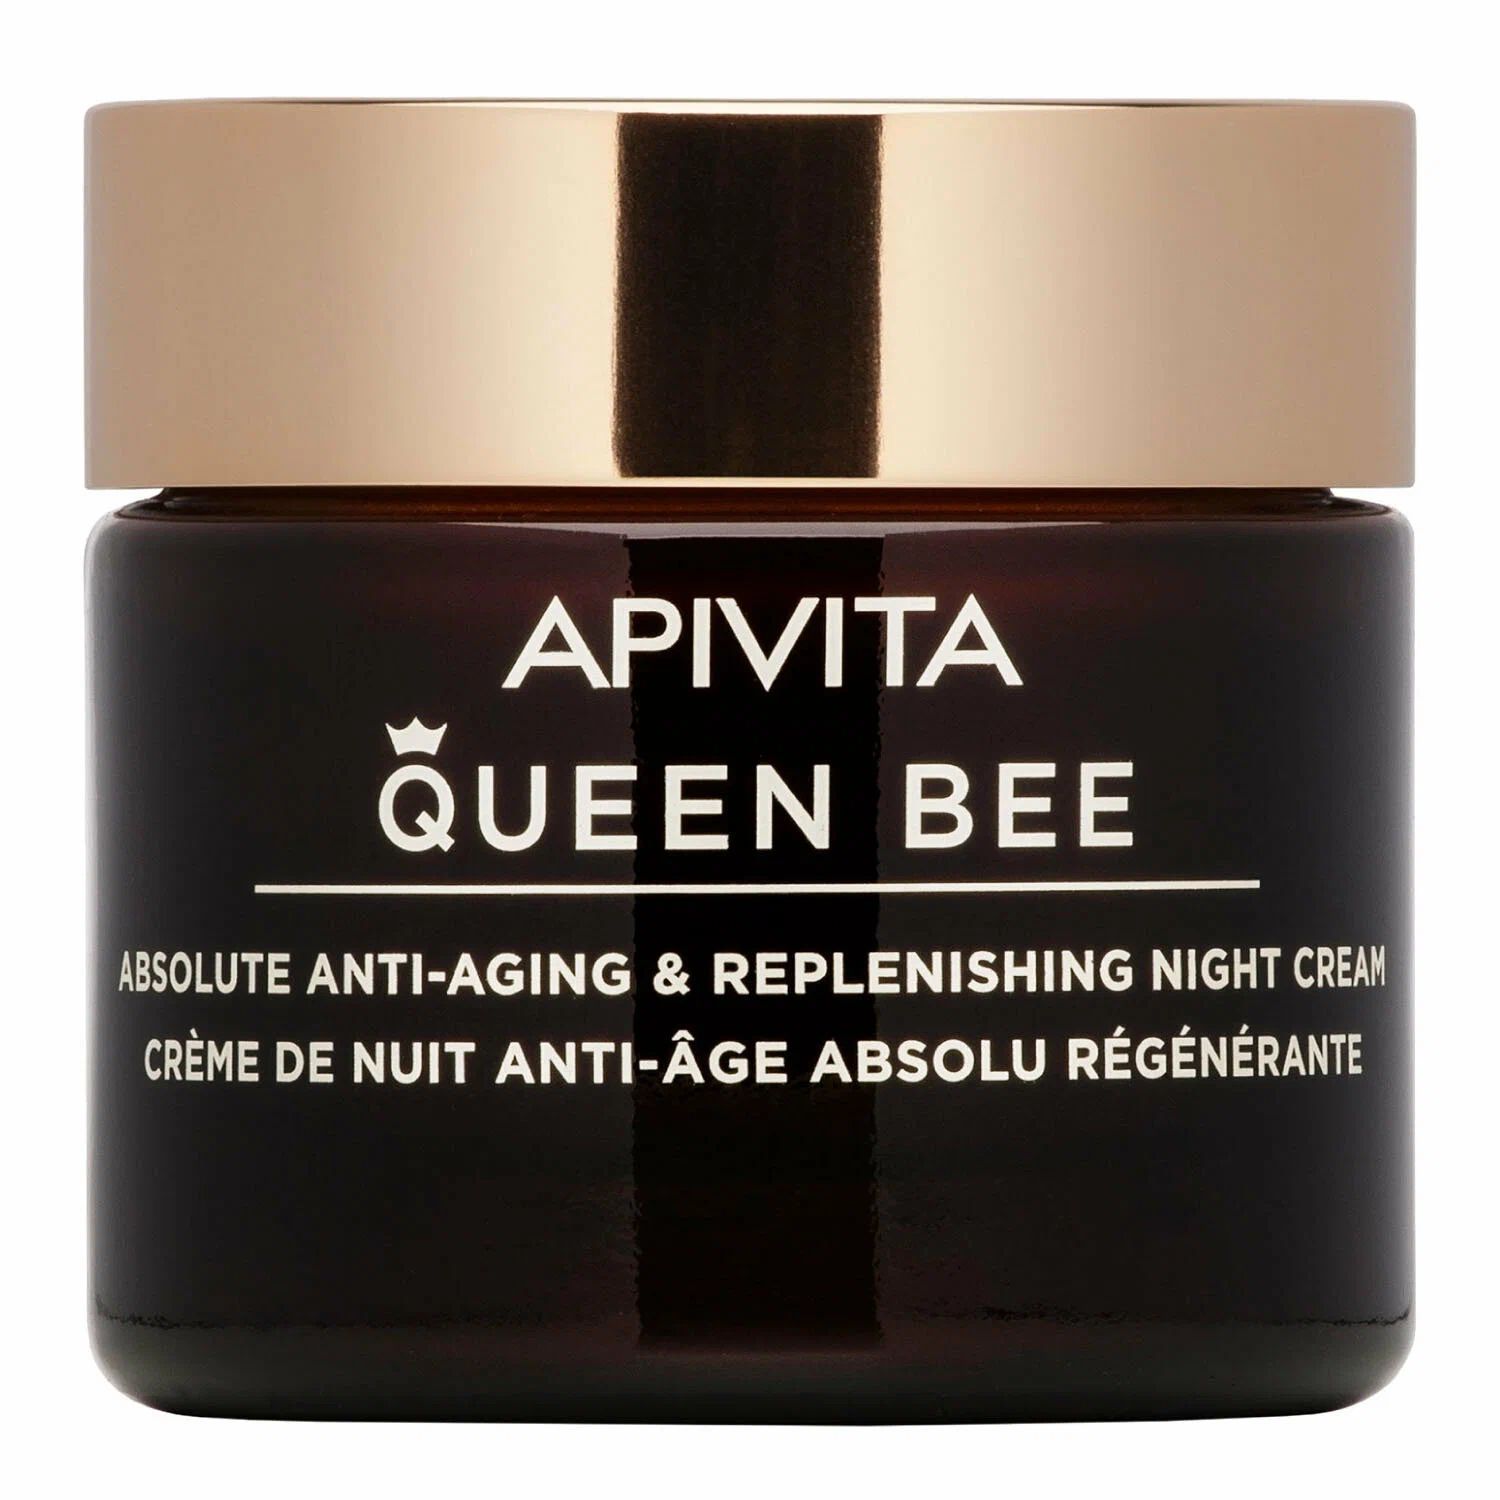 Ночной крем для лица Apivita Queen Bee Absoiute Anti-Aging and Replenishing Night Cream крем для лица ночной укрепляющий на основе граната